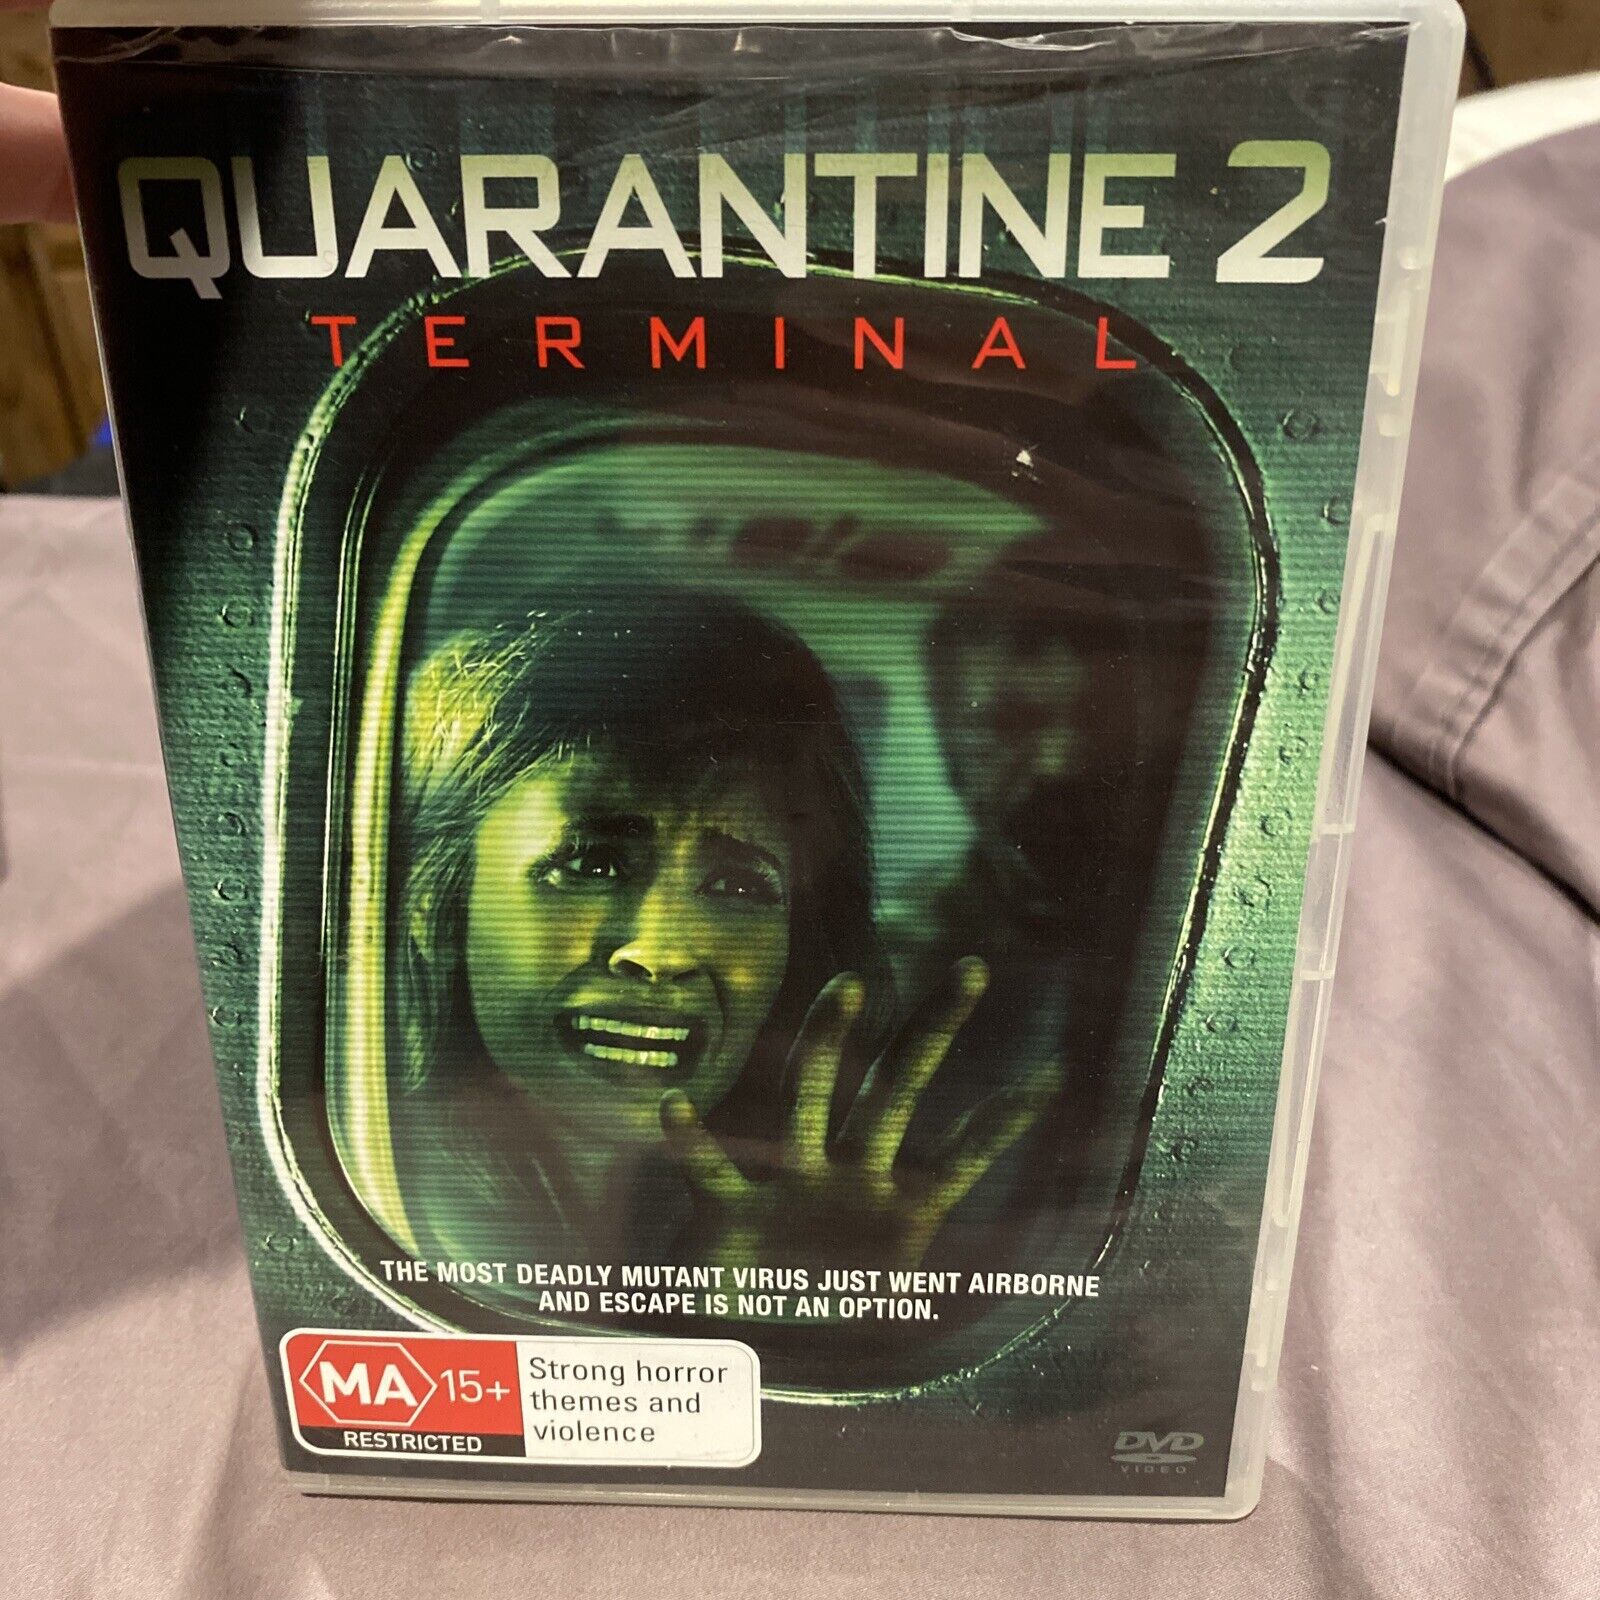 Quarantine 2 - Terminal (DVD, 2011)